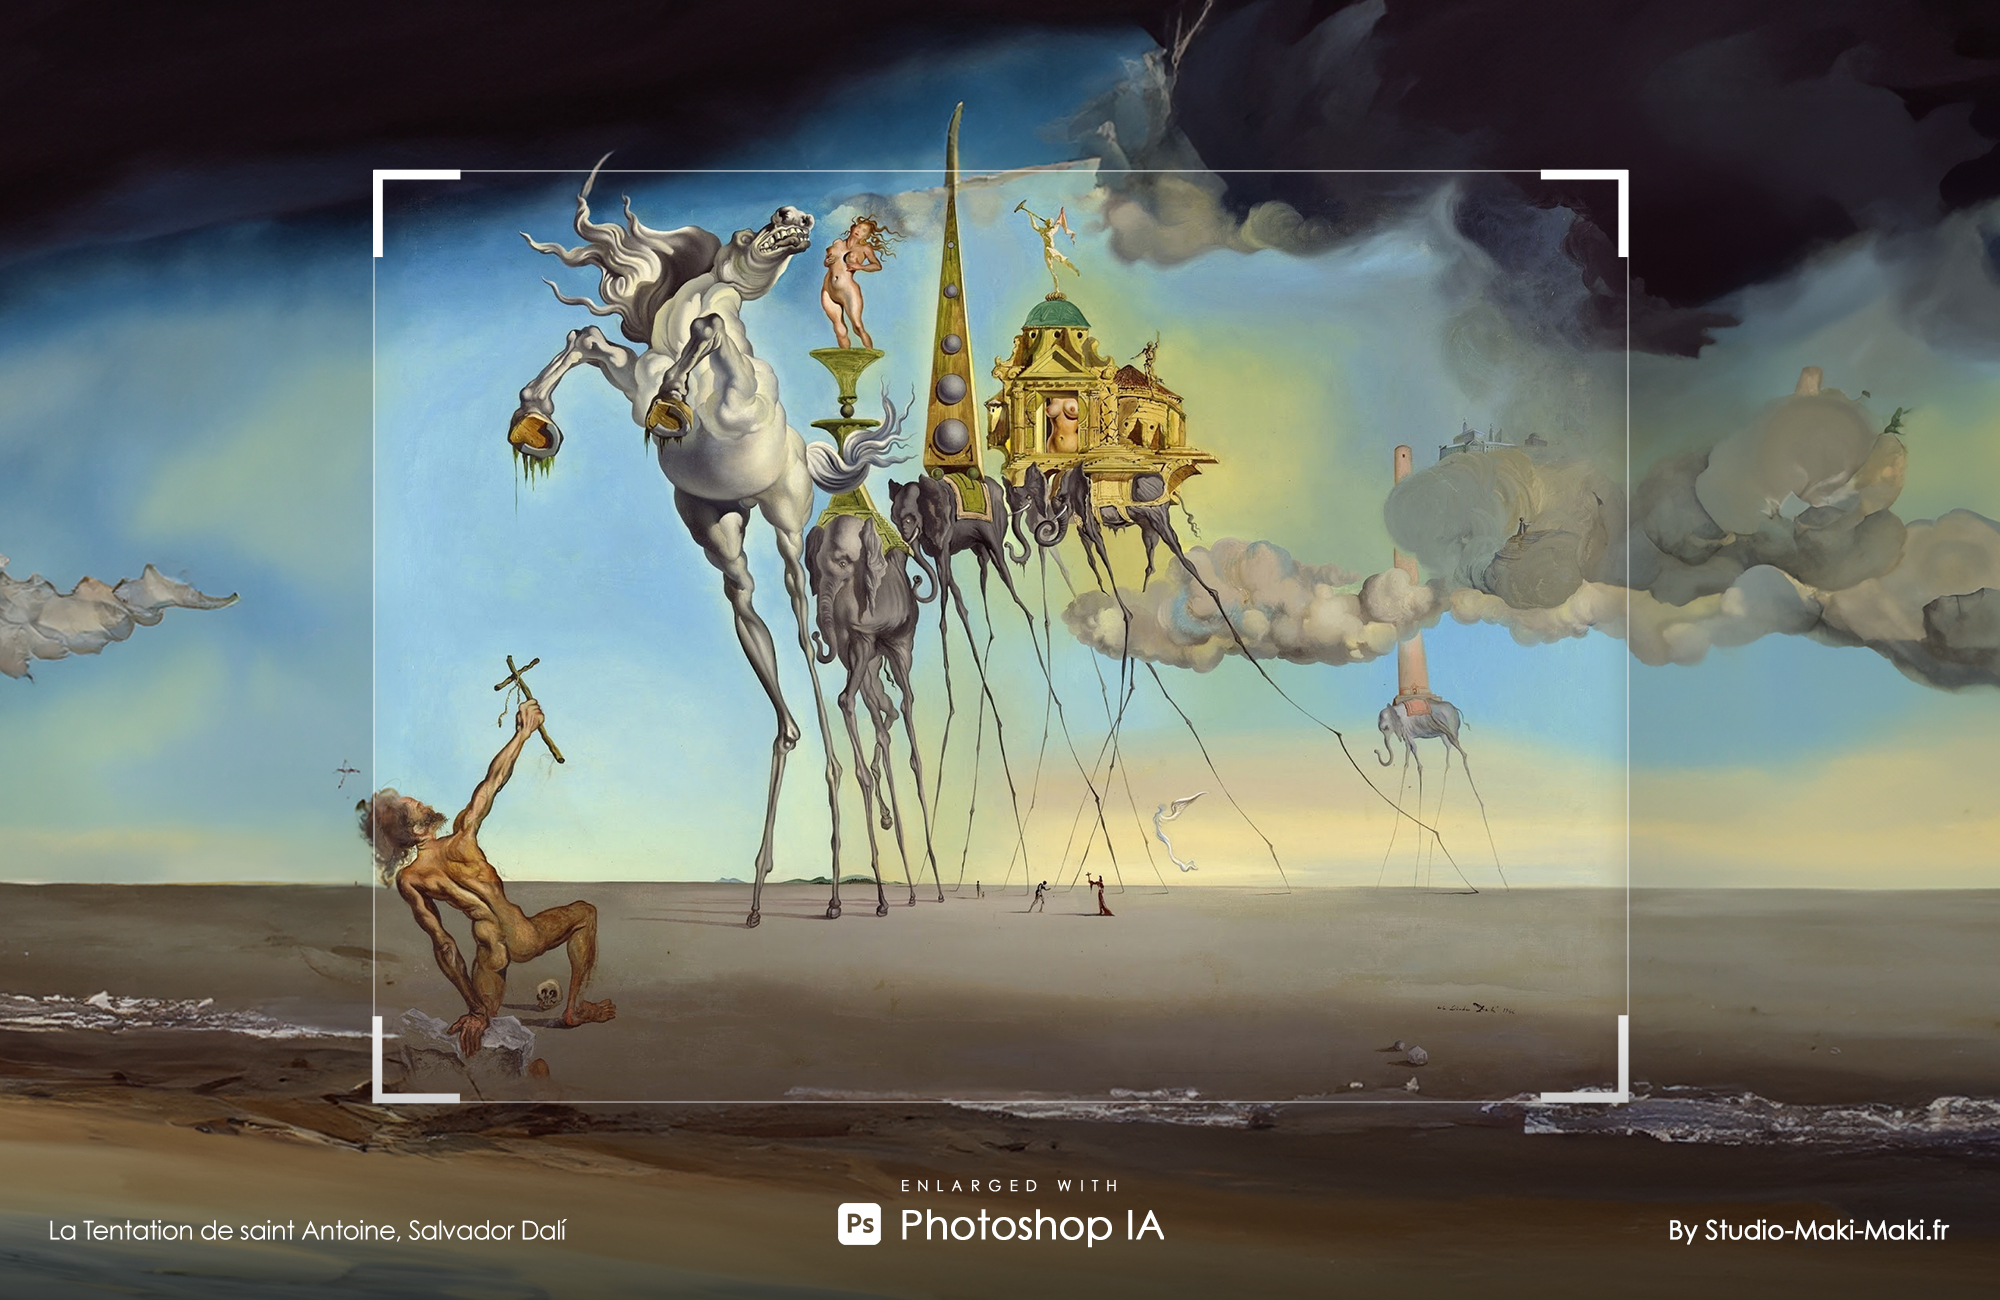 La Tentation de saint Antoine, Salvador Dalí - Enlarged with Photoshop IA - By Studio Maki Maki